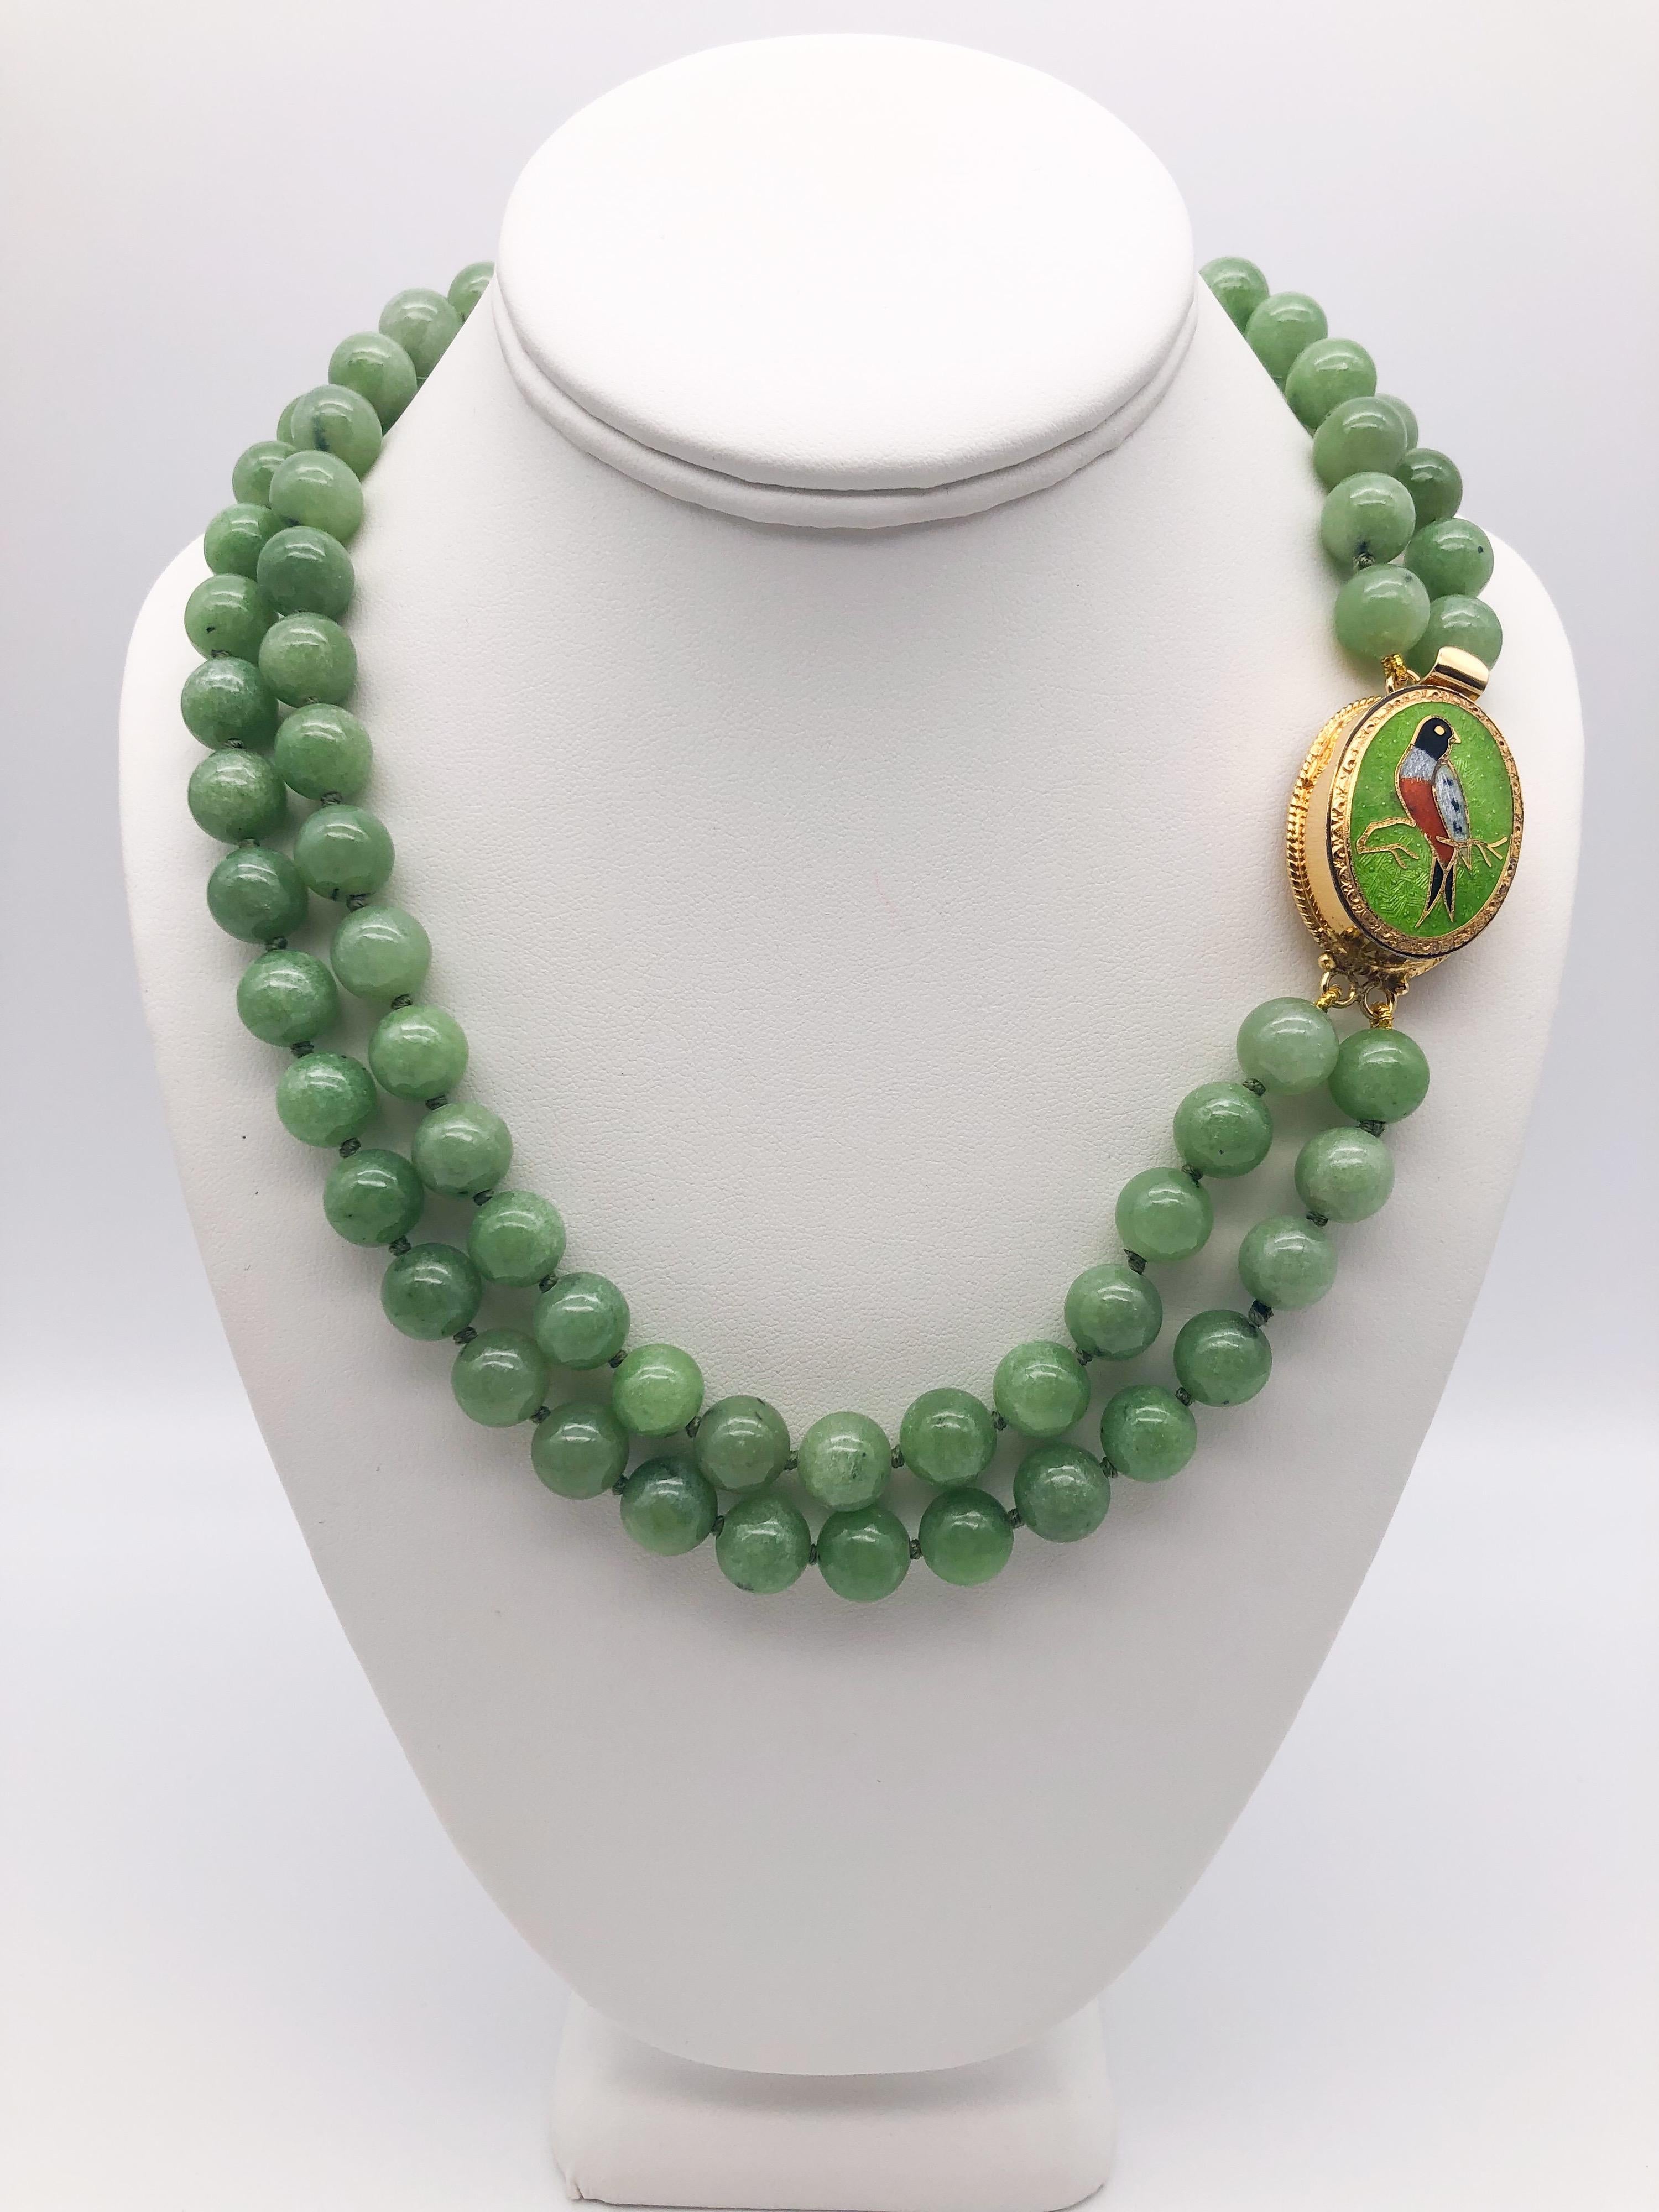 A.Jeschel   Burmese Jade 2 strand necklace with Vintage Cloisonné clasp. 1